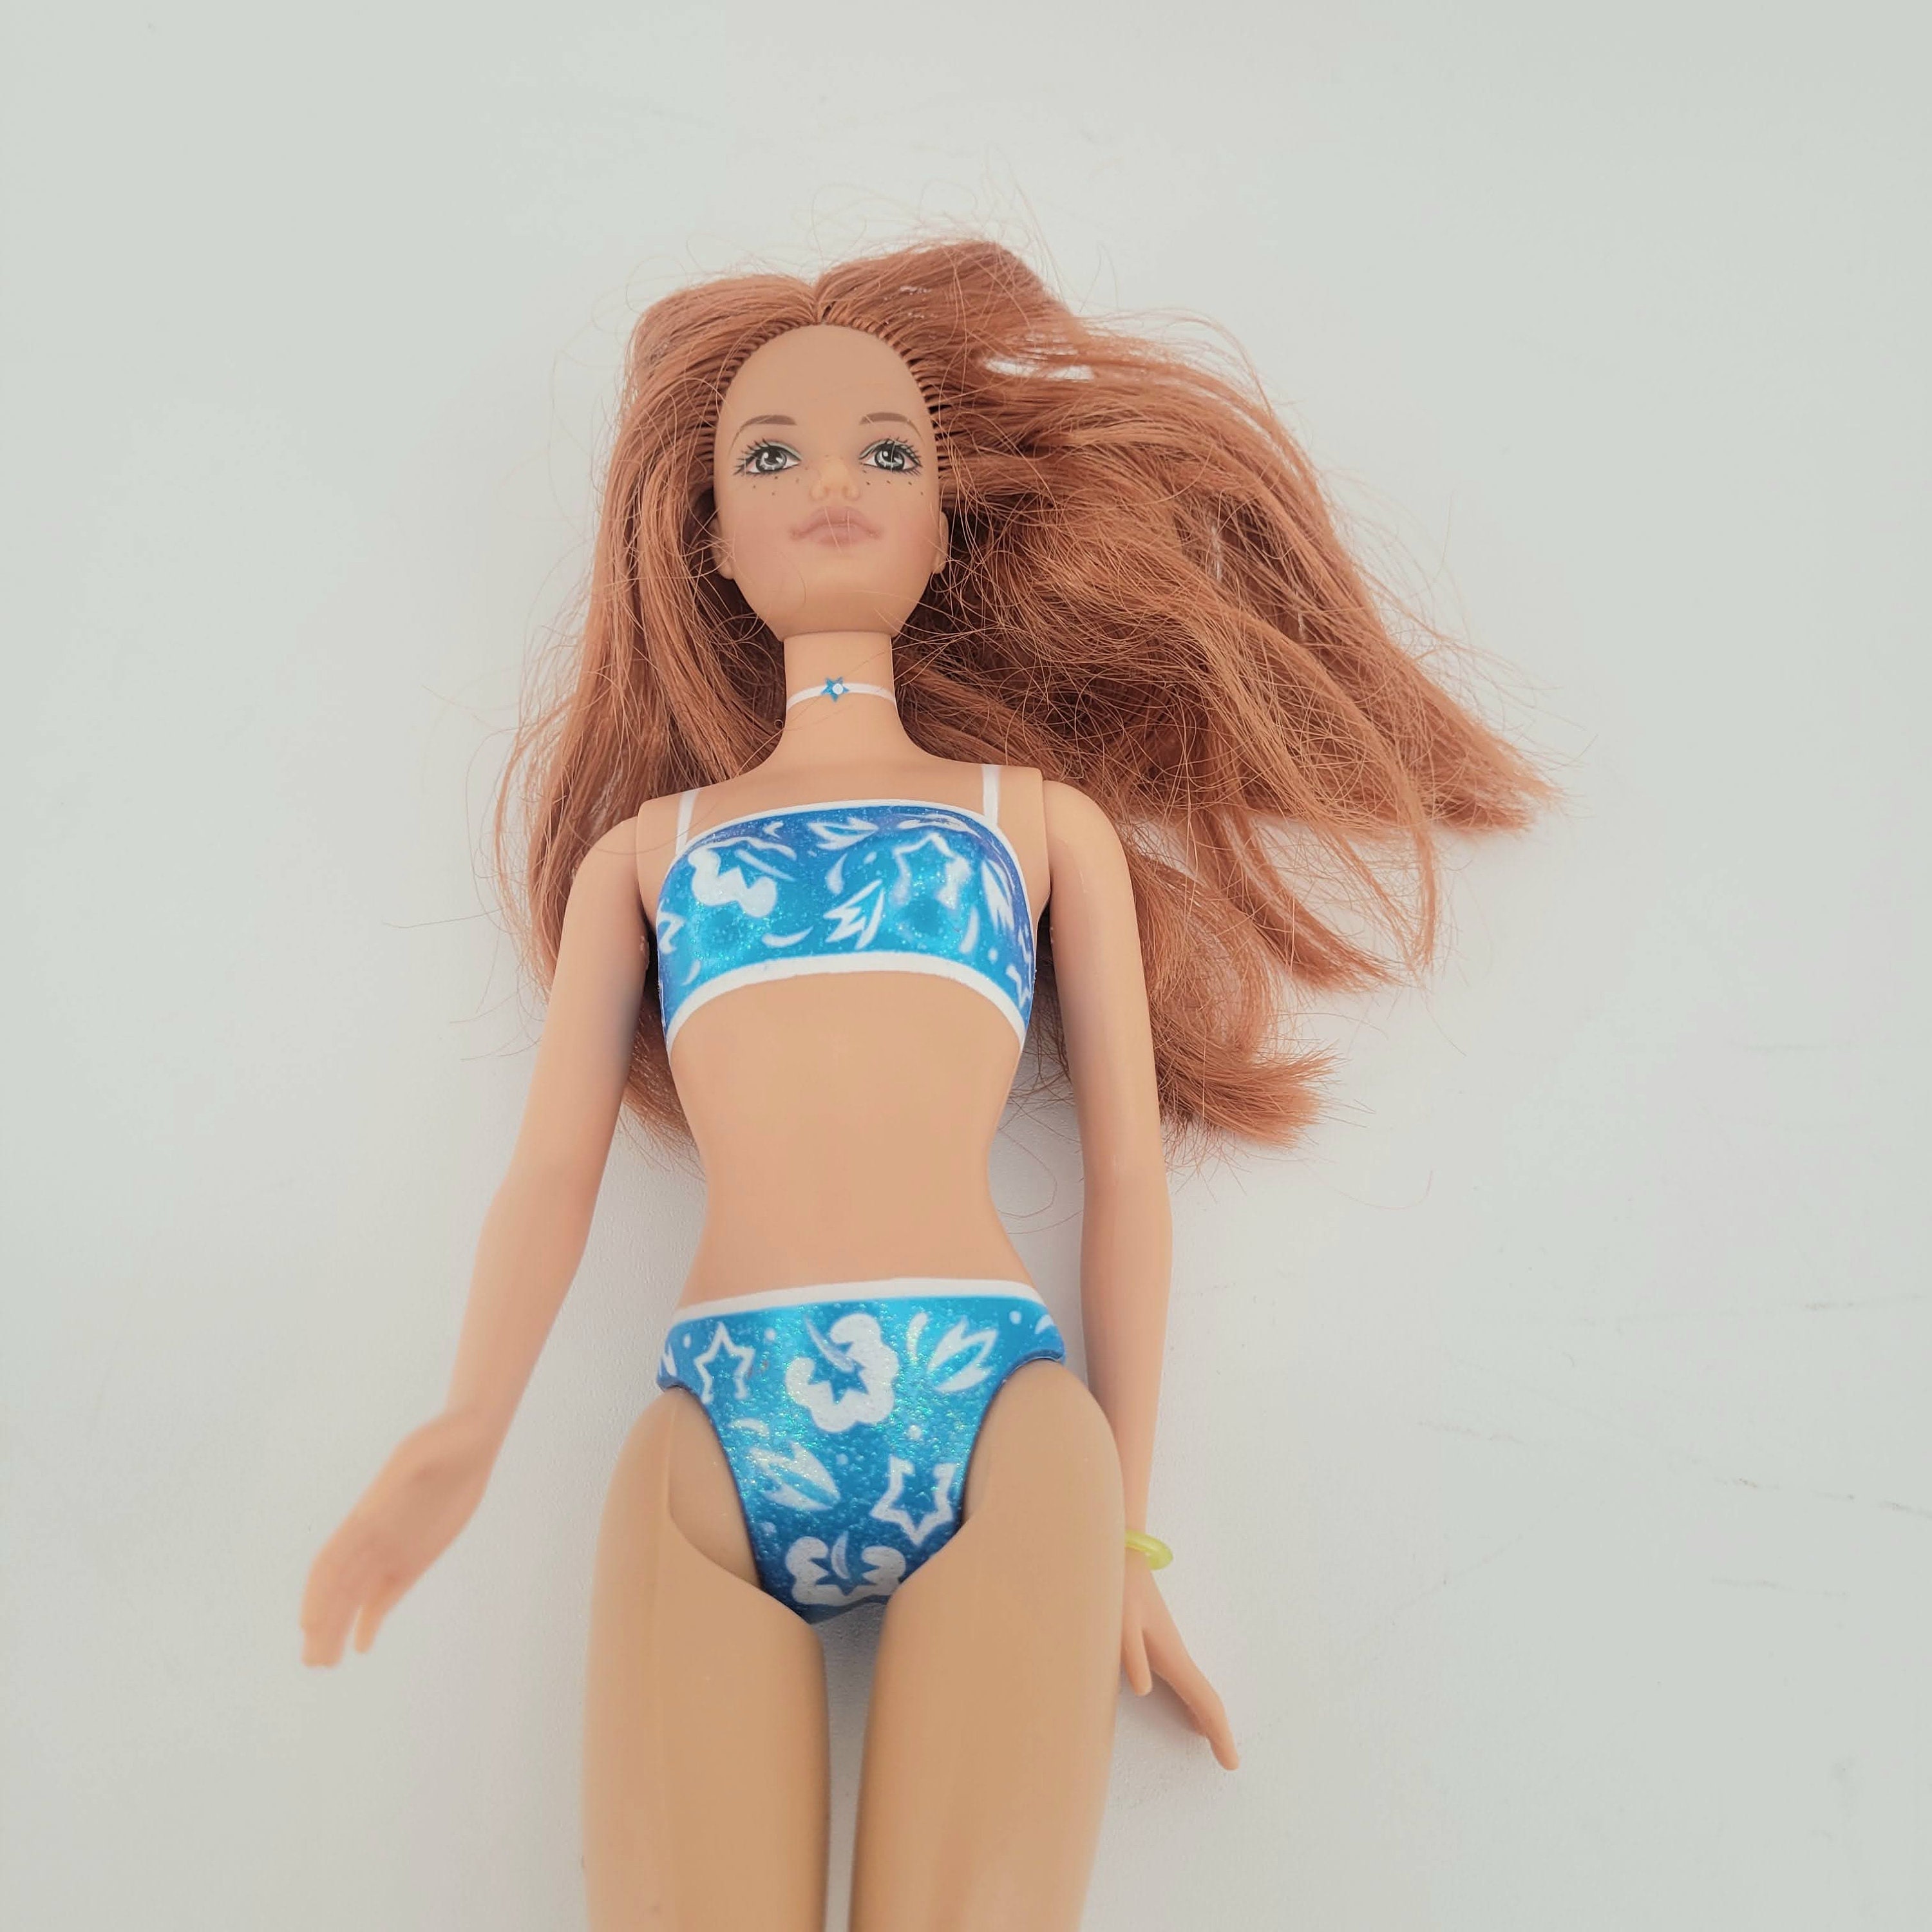 PDF Sewing Pattern Underwear Bikinis, Bra, Pants, Bust for Made to Move Barbie  Original Fashion Dolls 